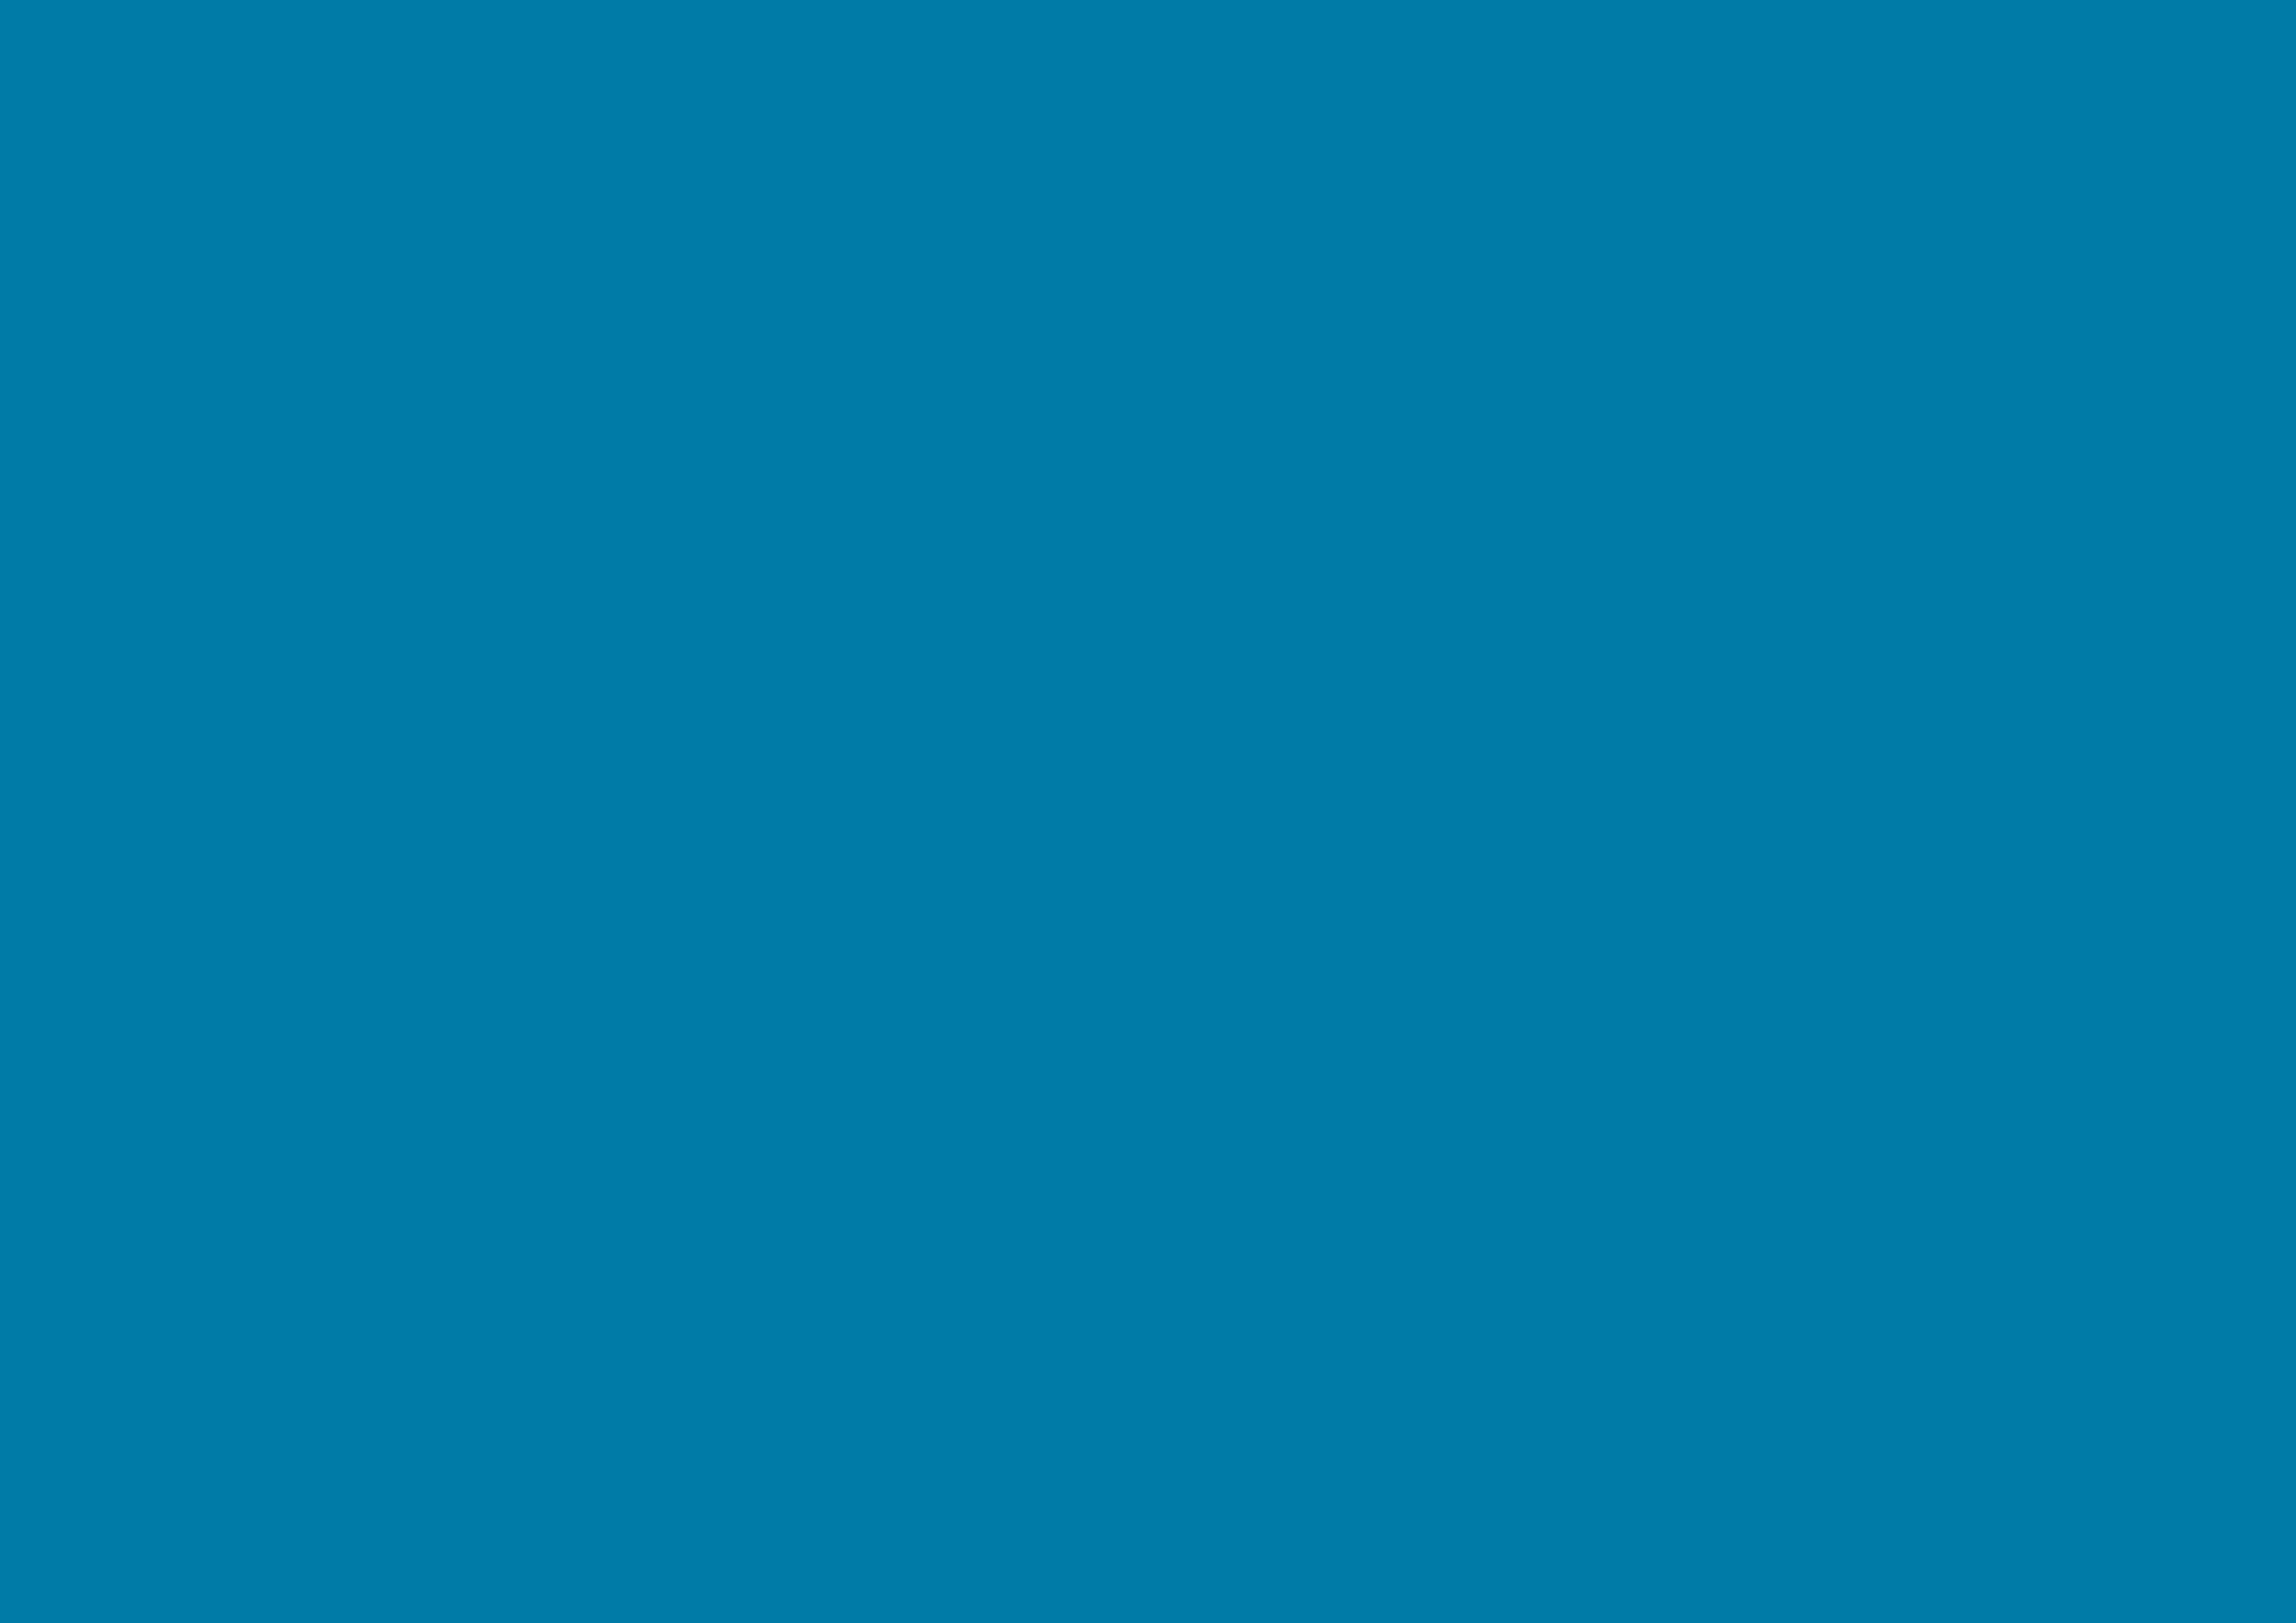 3508x2480 Celadon Blue Solid Color Background